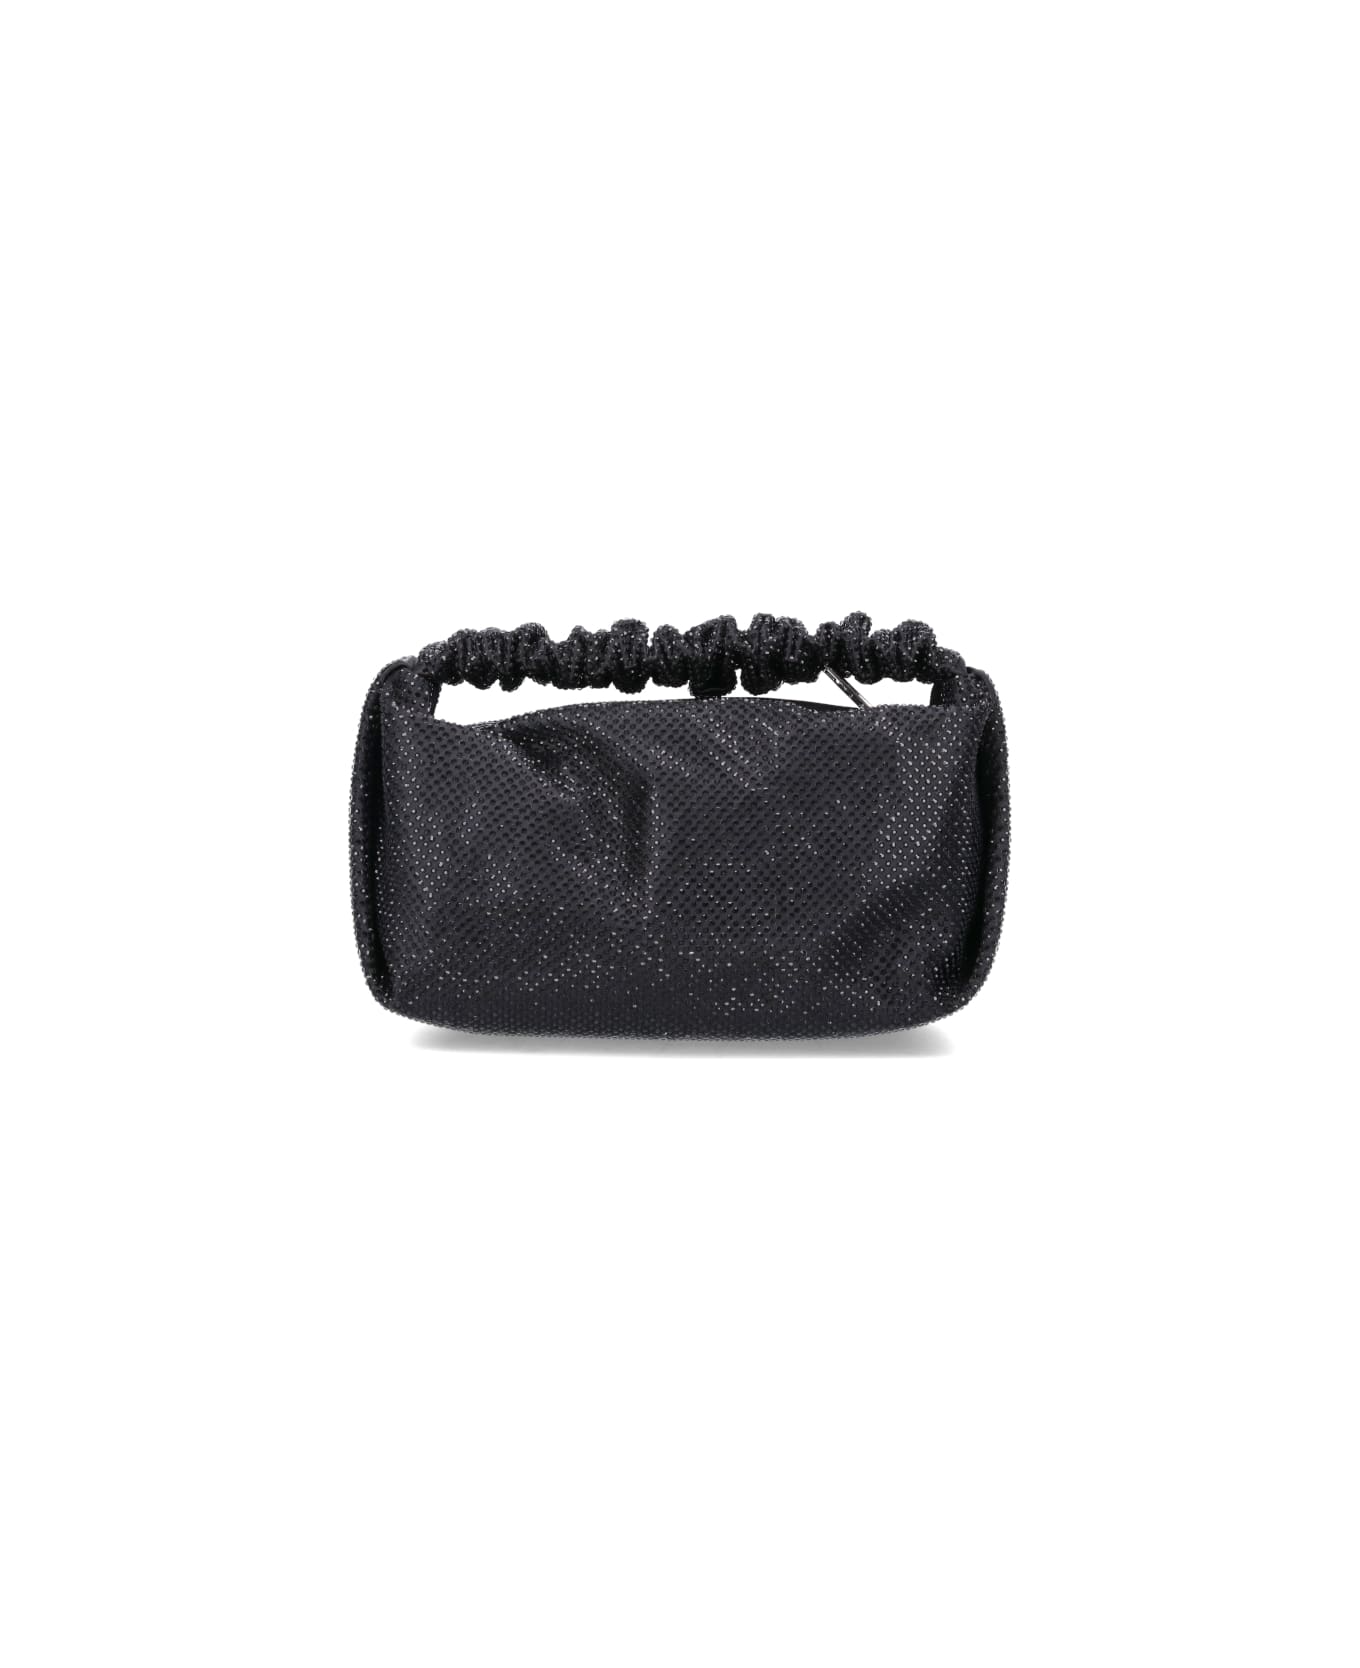 Alexander Wang "scrunchie" Mini Bag - Black  